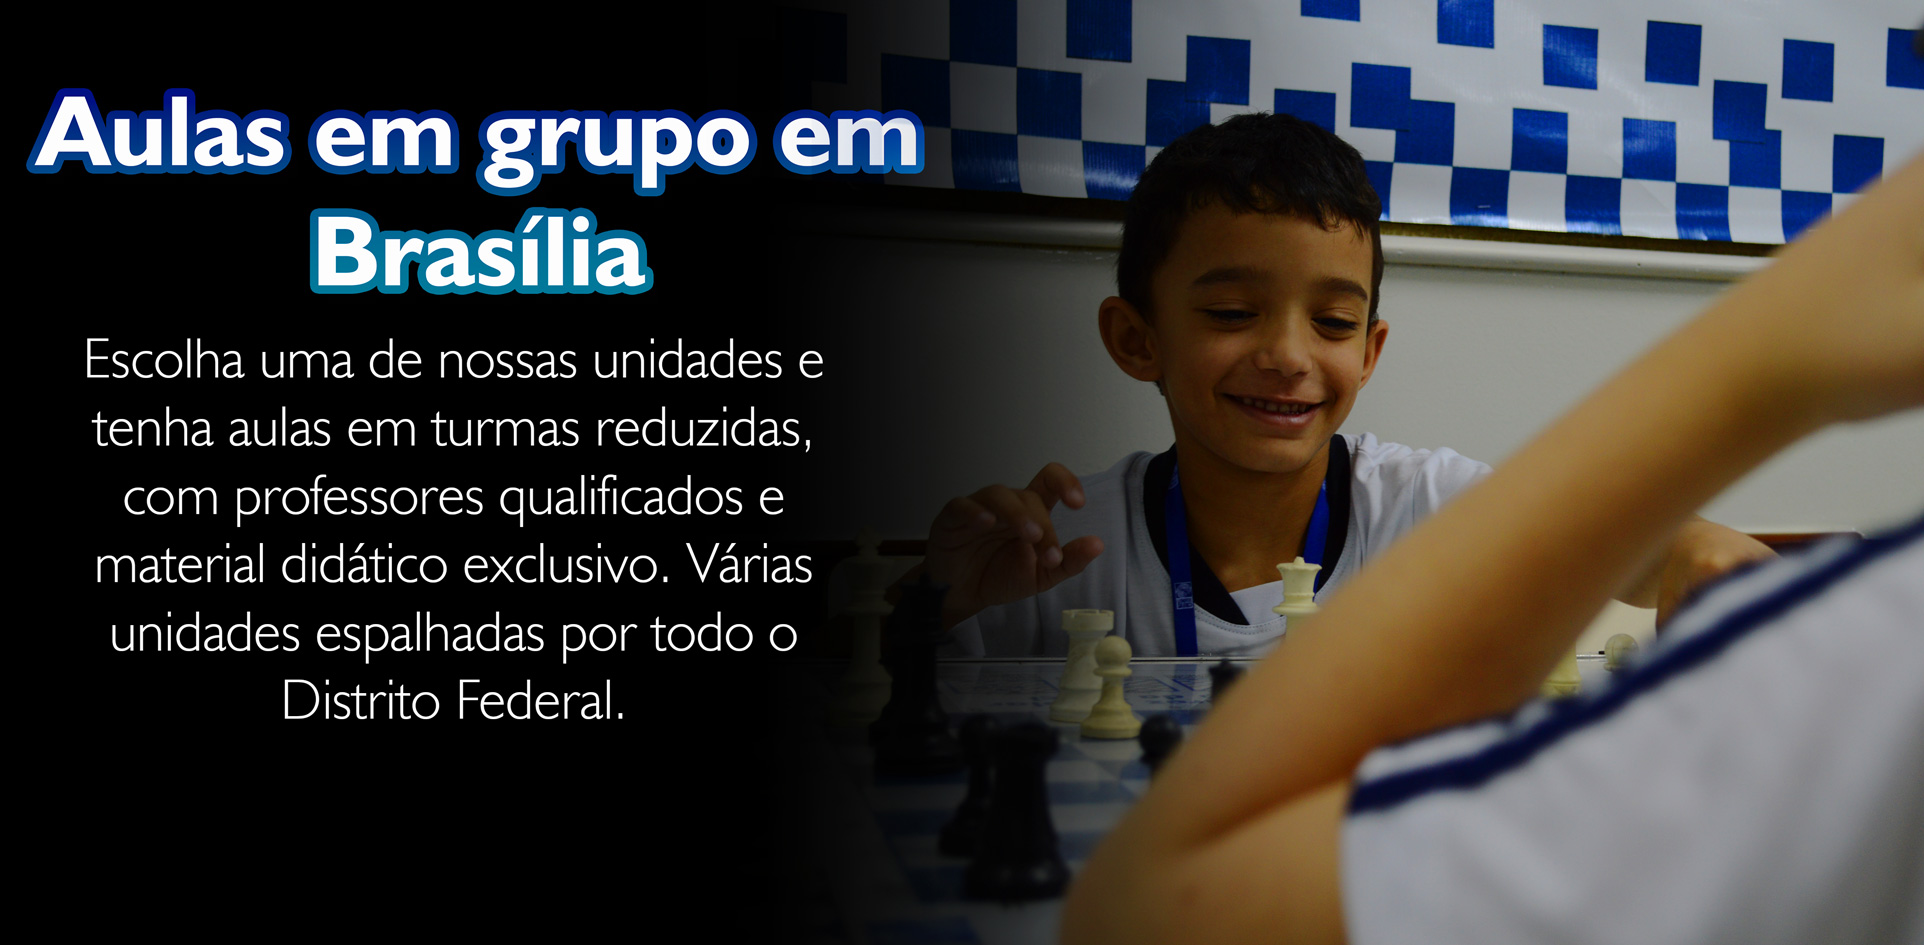 The British School of Brasília - Mearas Escola de Xadrez